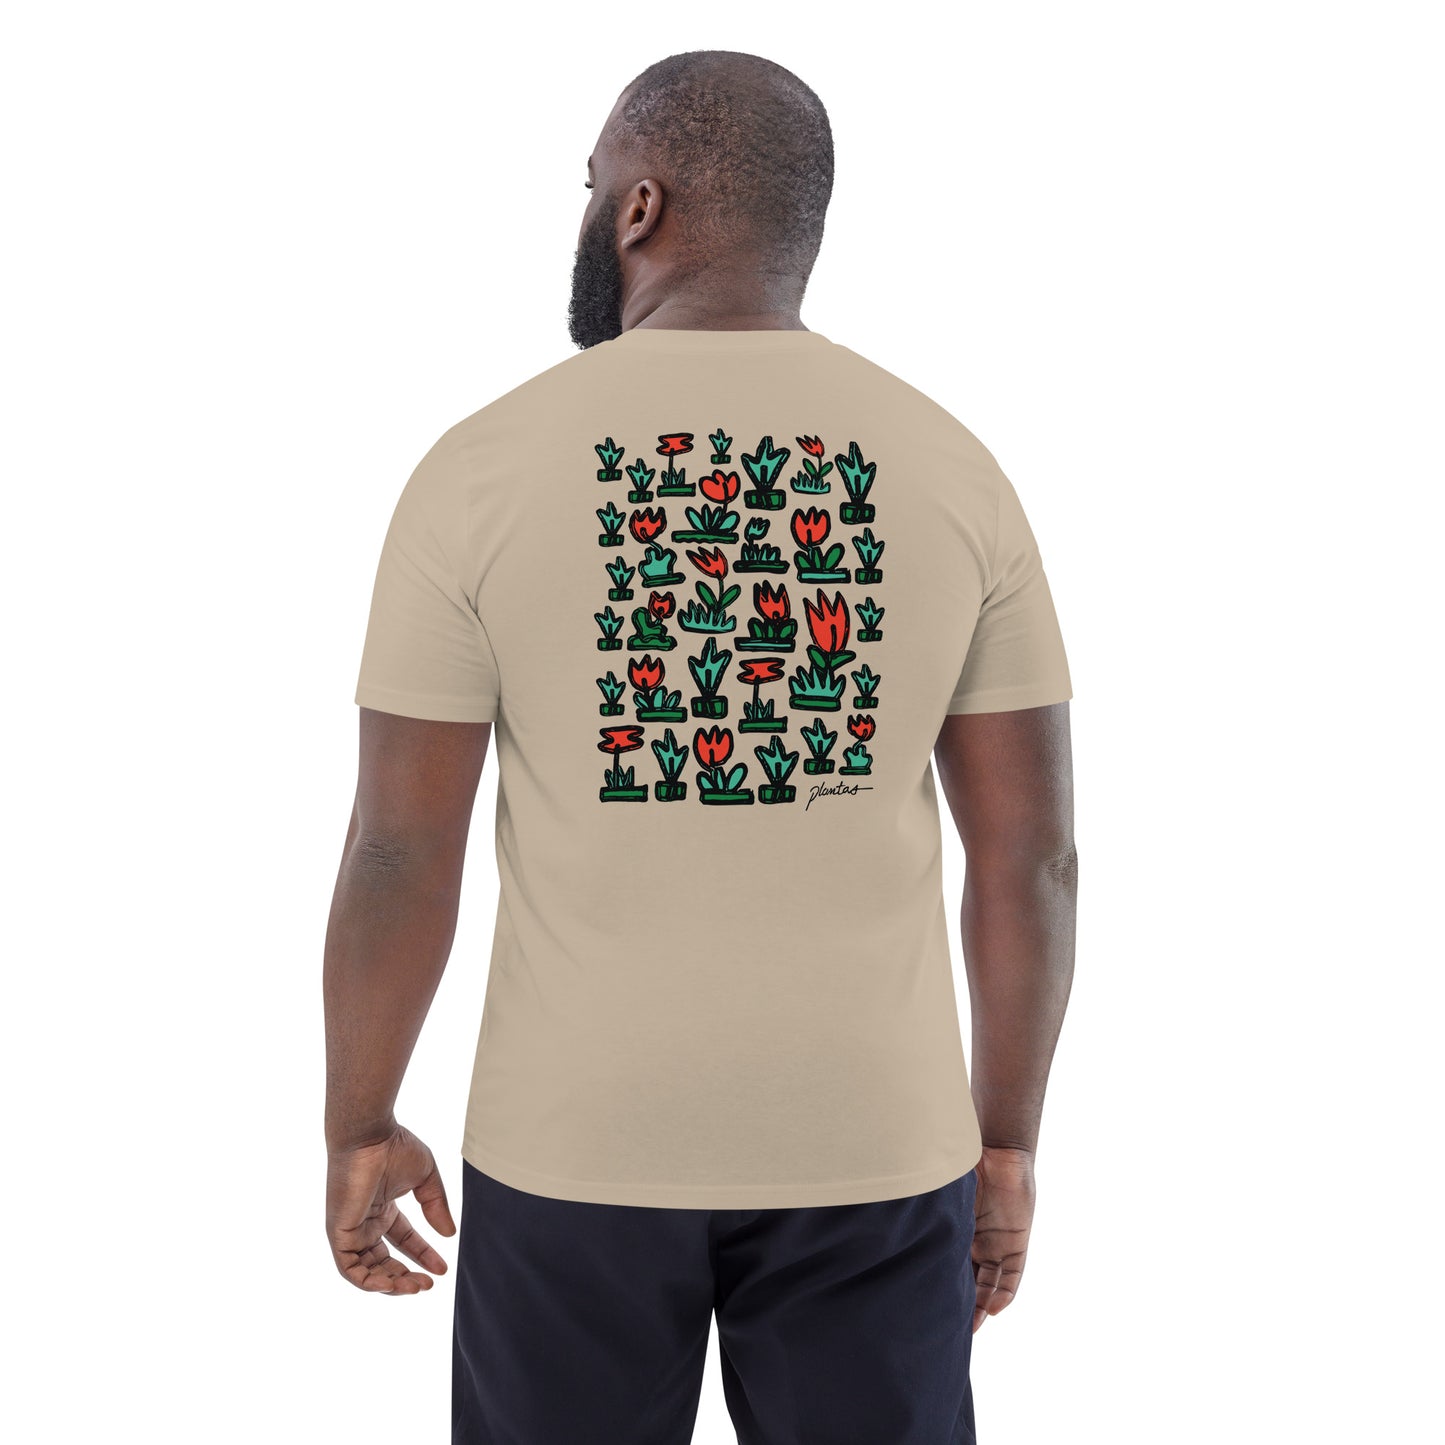 Camiseta unisex de algodón orgánico Doodle